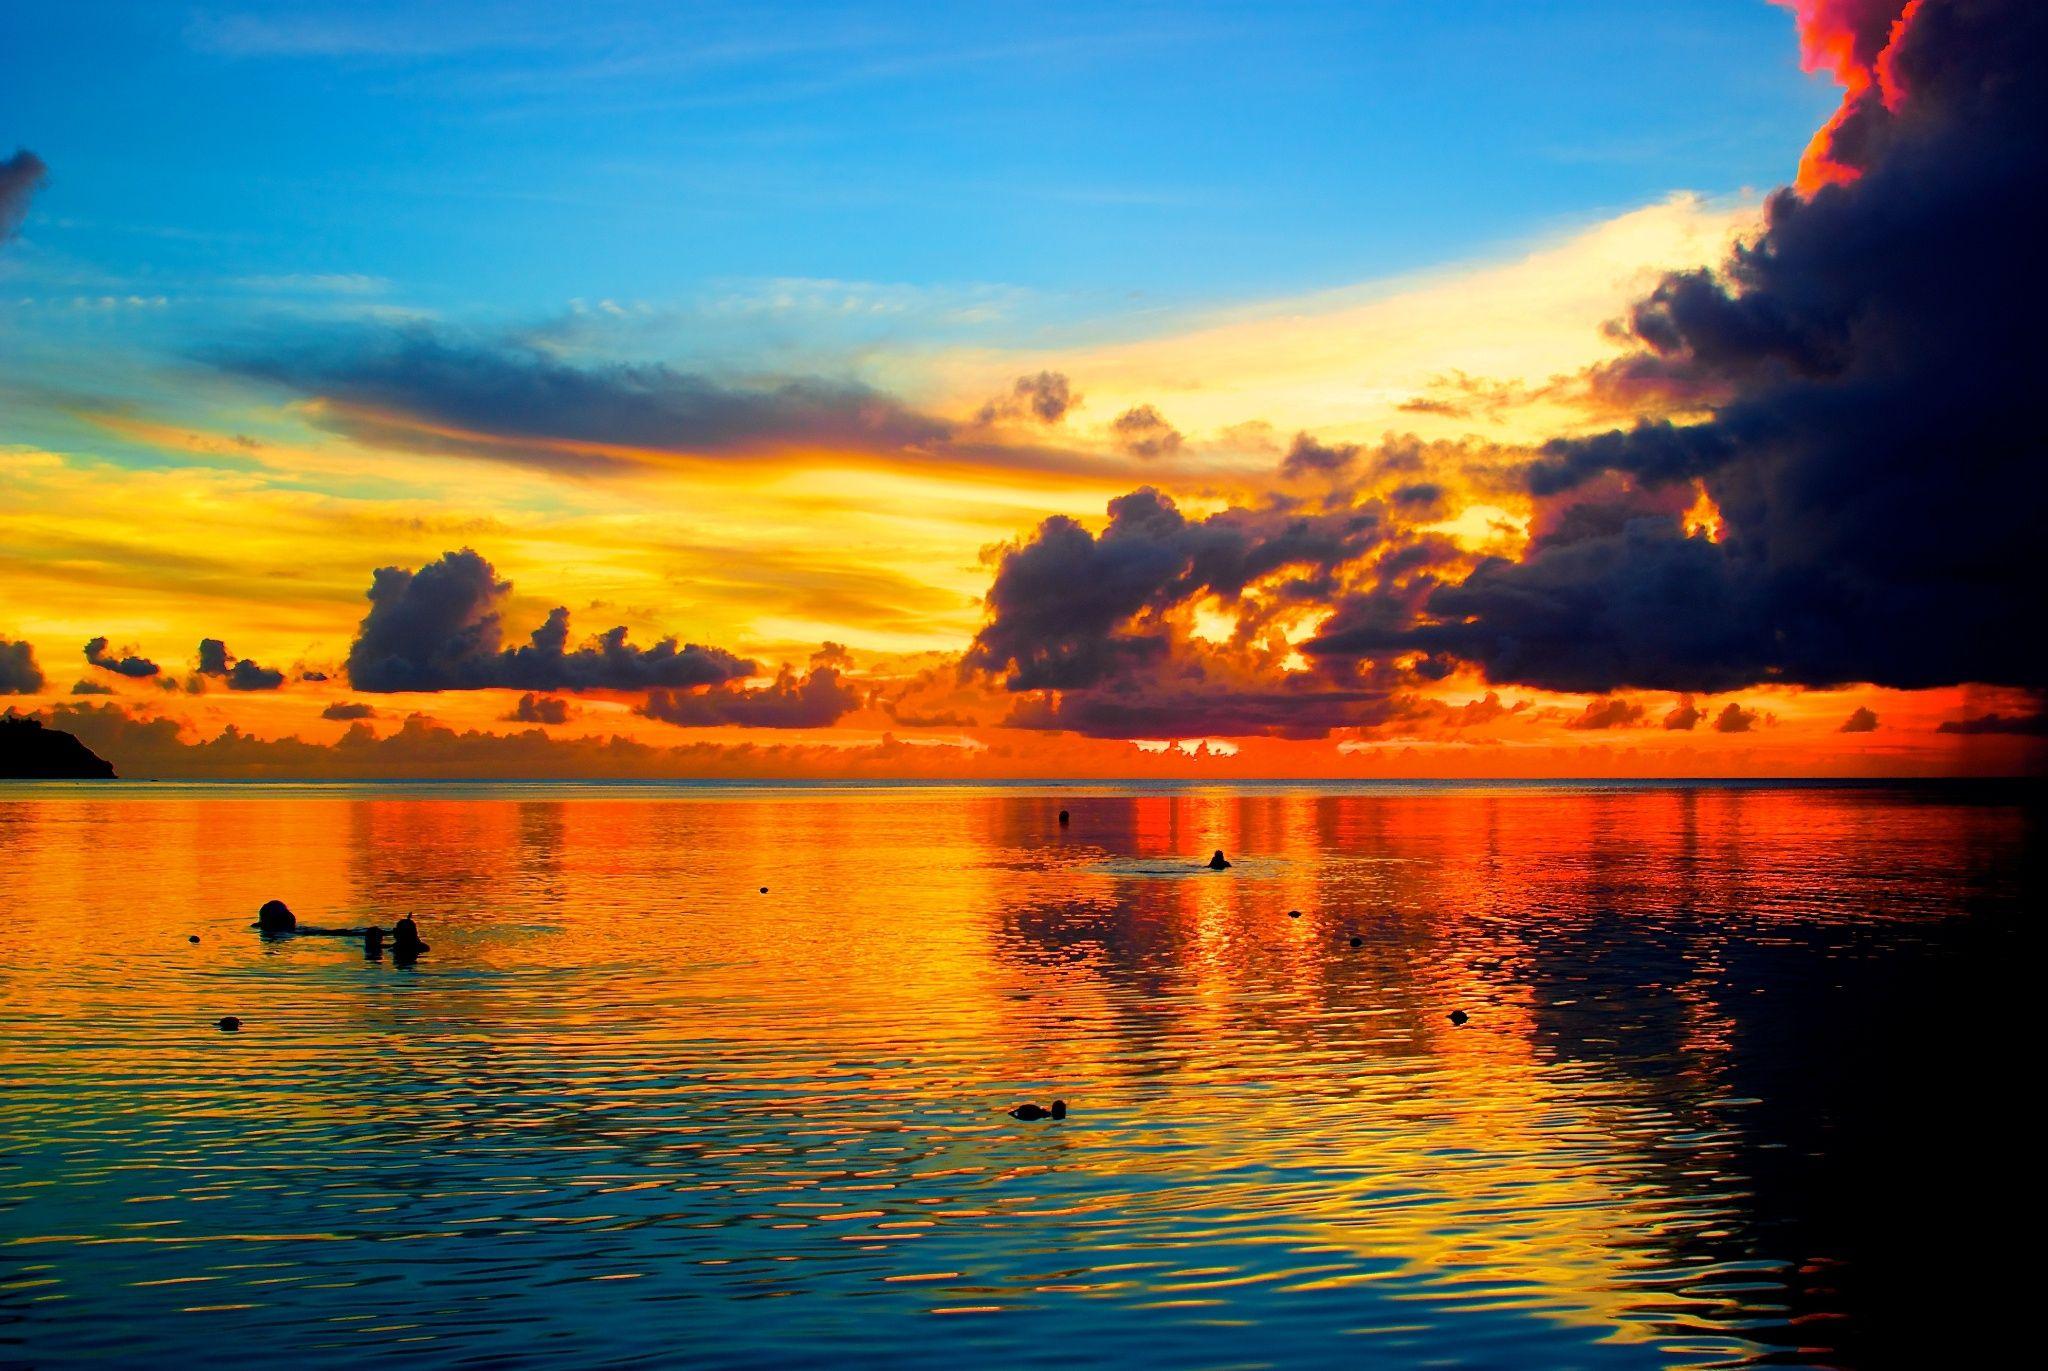 Sunset of Tumon beach, Guam by Takuya ASADA on 500px. Sunrise